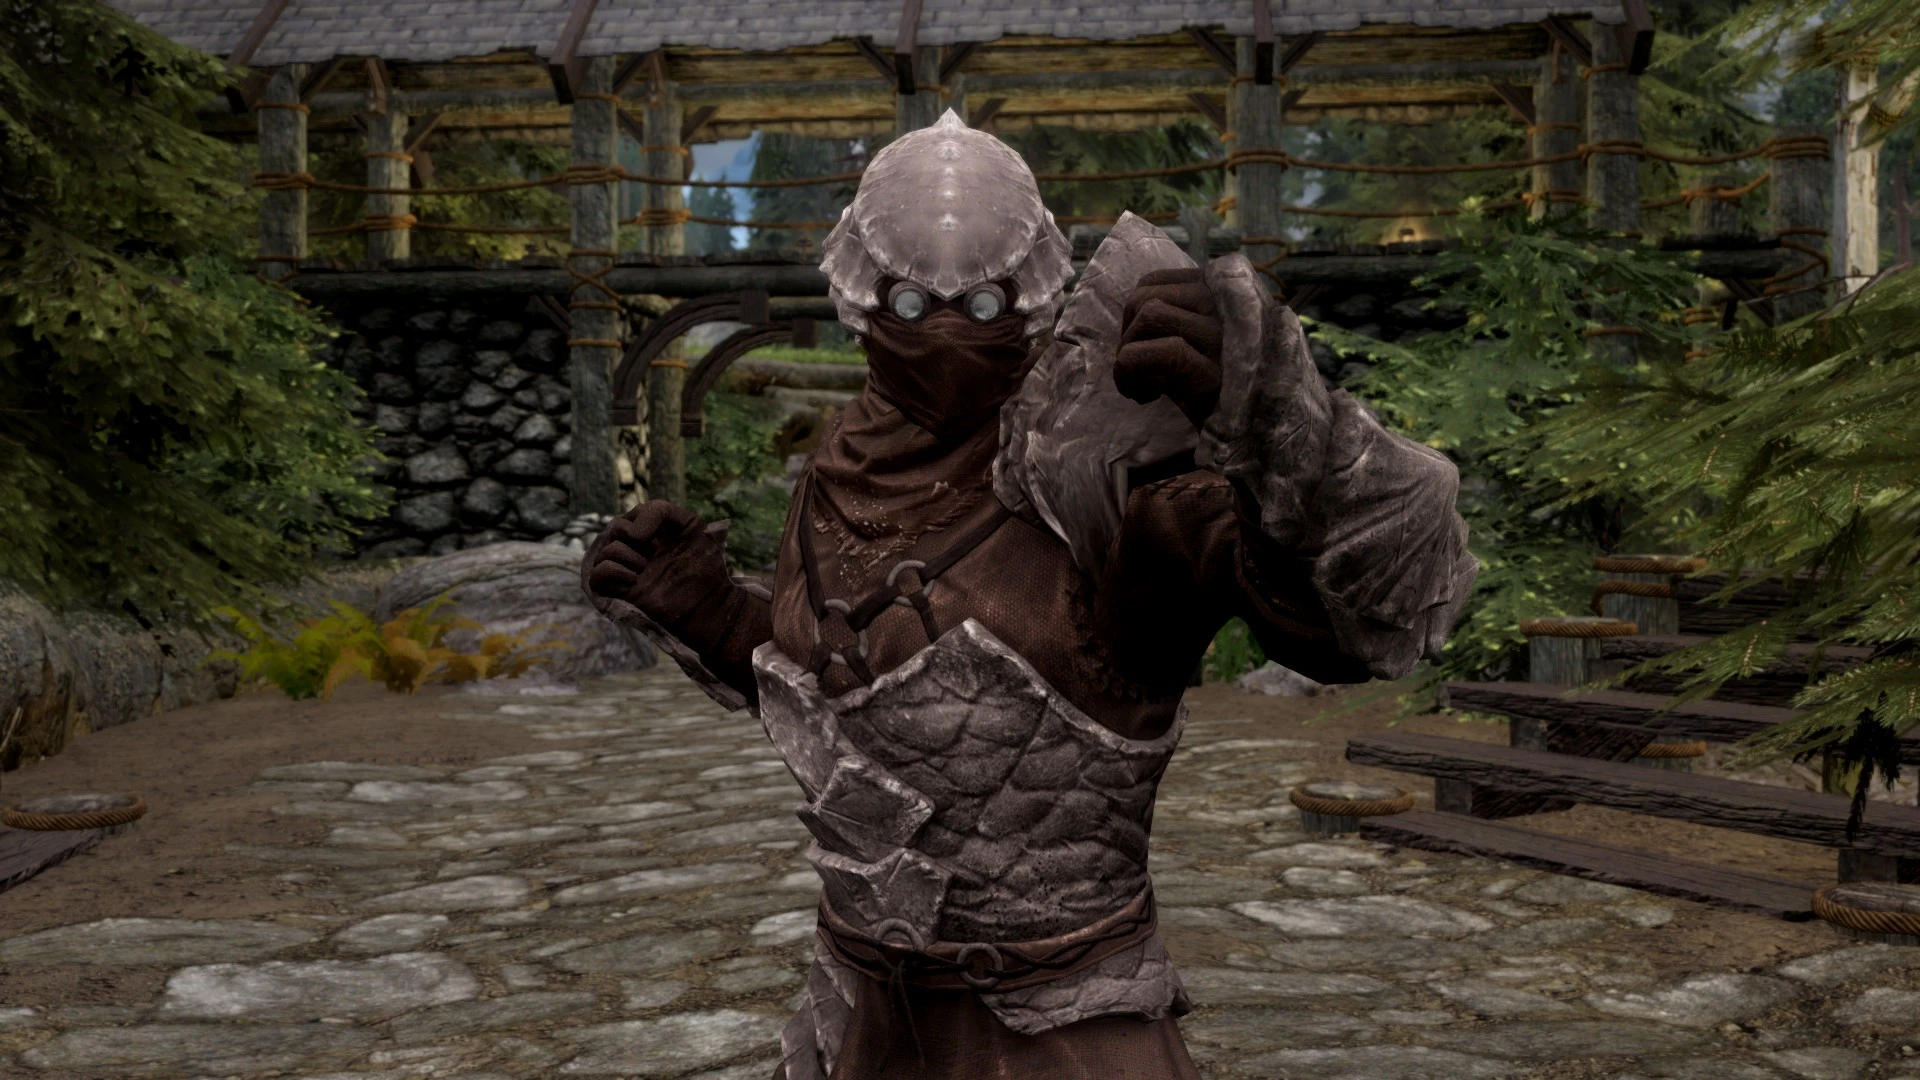 ashland chitin armour at skyrim nexus mods and community.